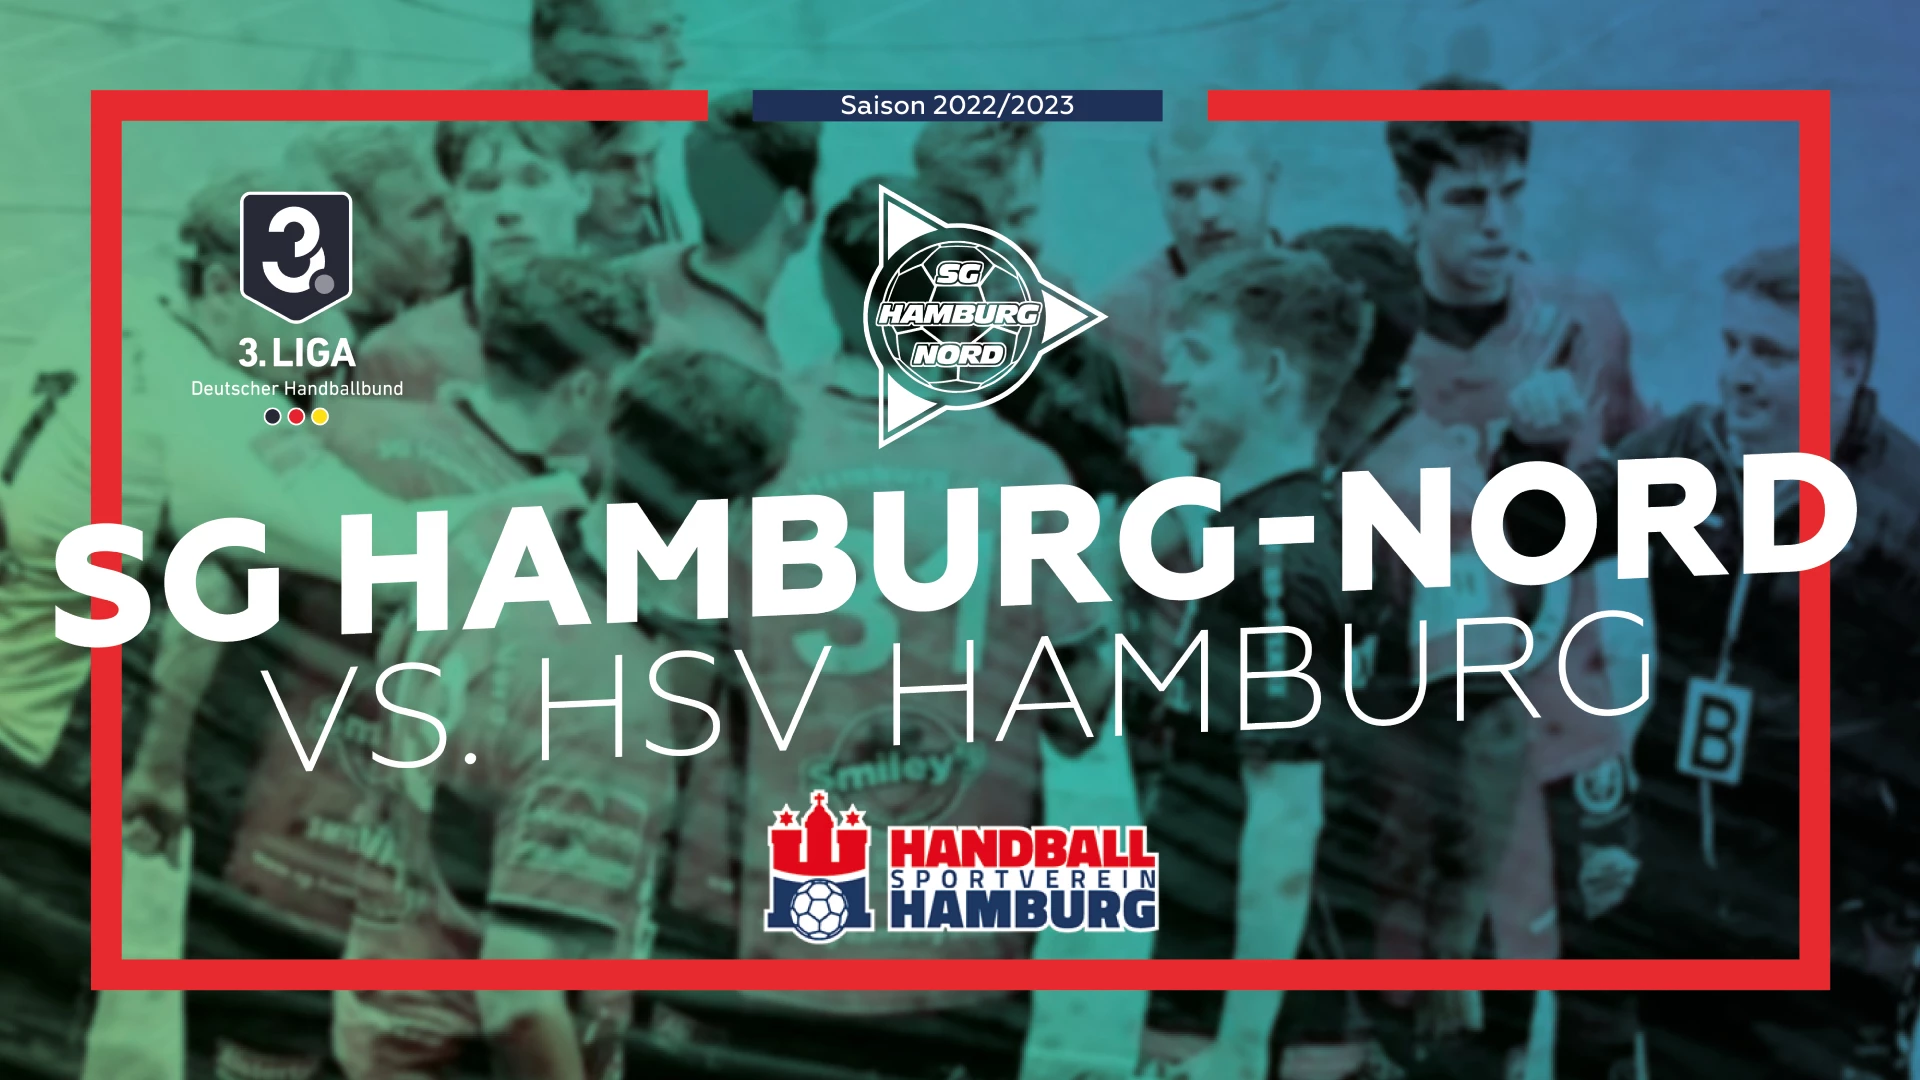 Testspiel: SG Hamburg-Nord vs. HSV Hamburg 19.08.2022 um 18:45 Uhr auf 